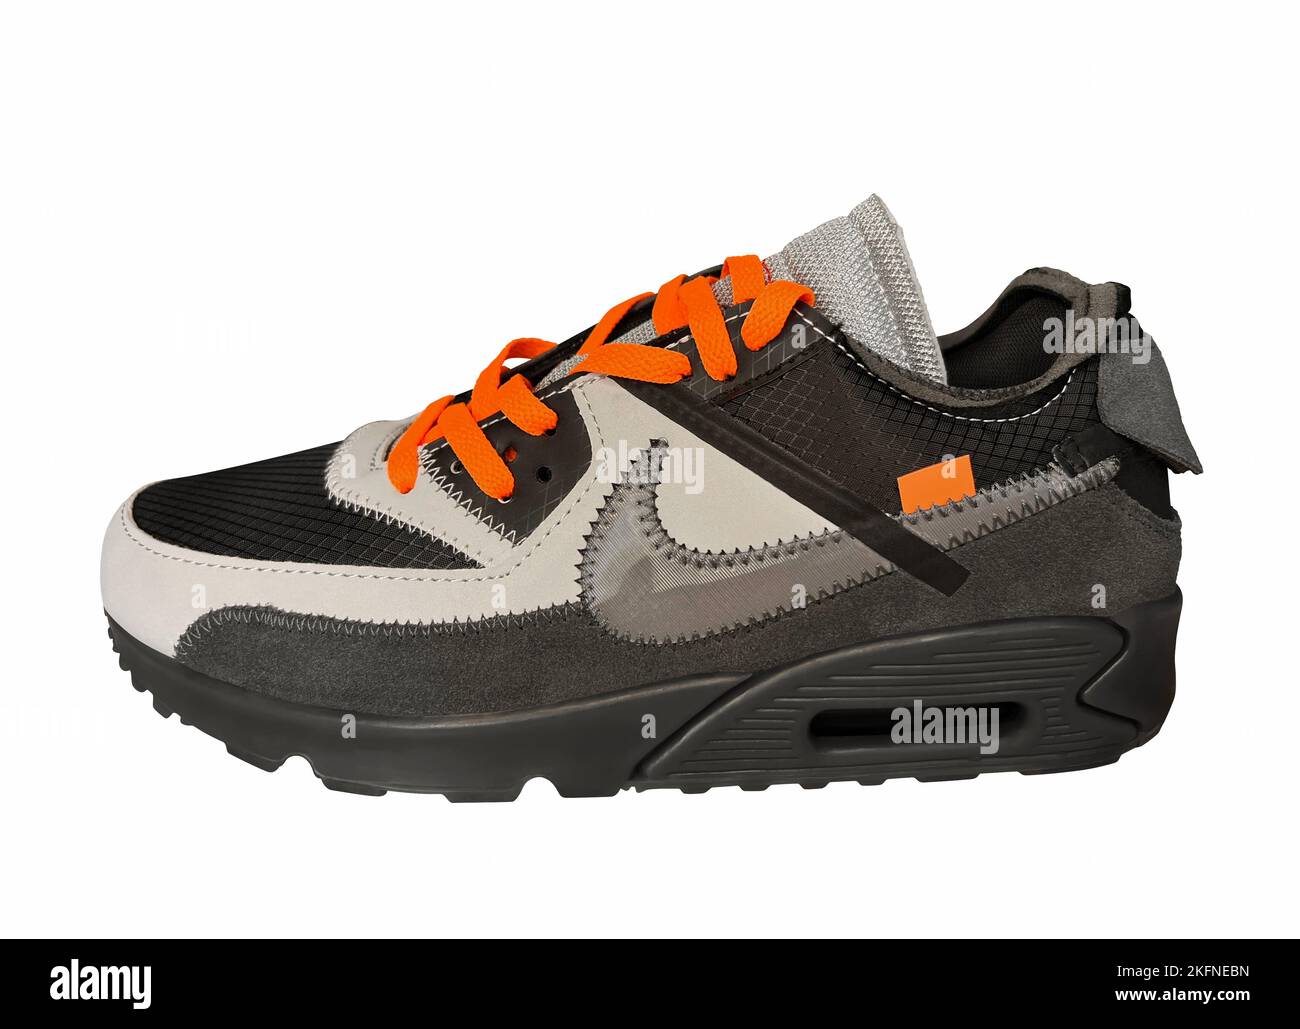 Zapatillas nike air max fotografías e imágenes de alta resolución - Alamy